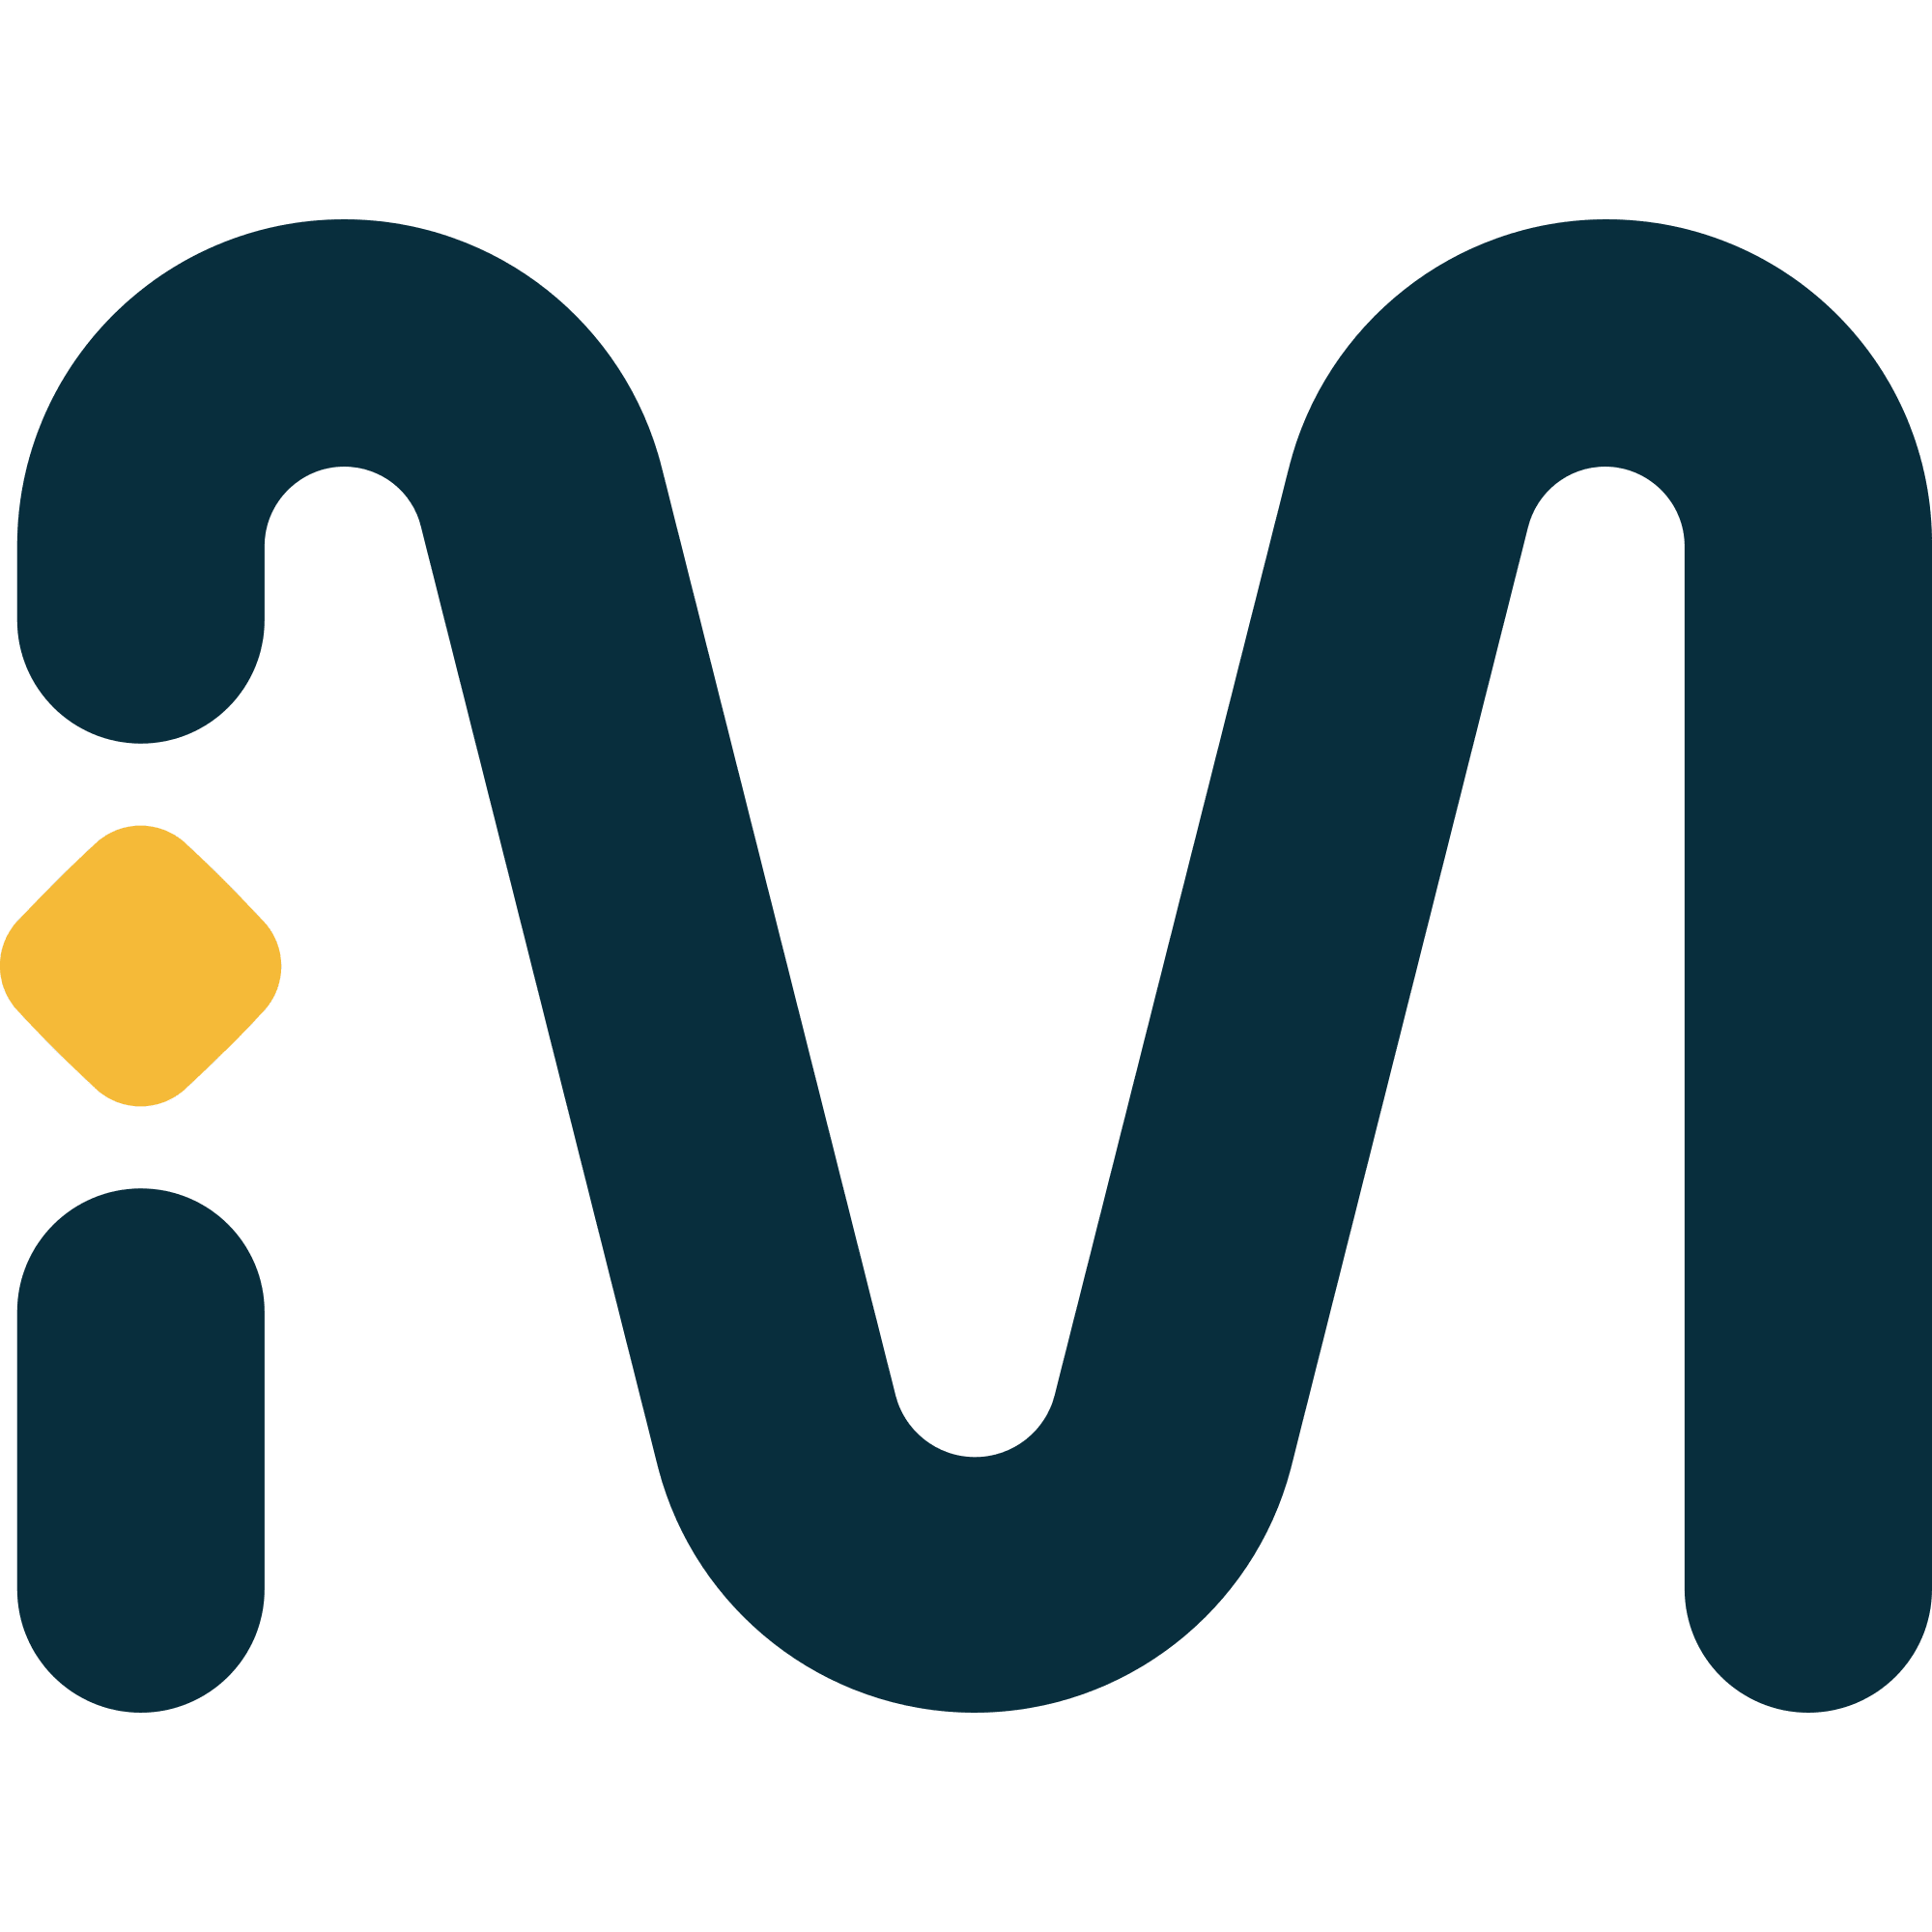 MVL logo in png format